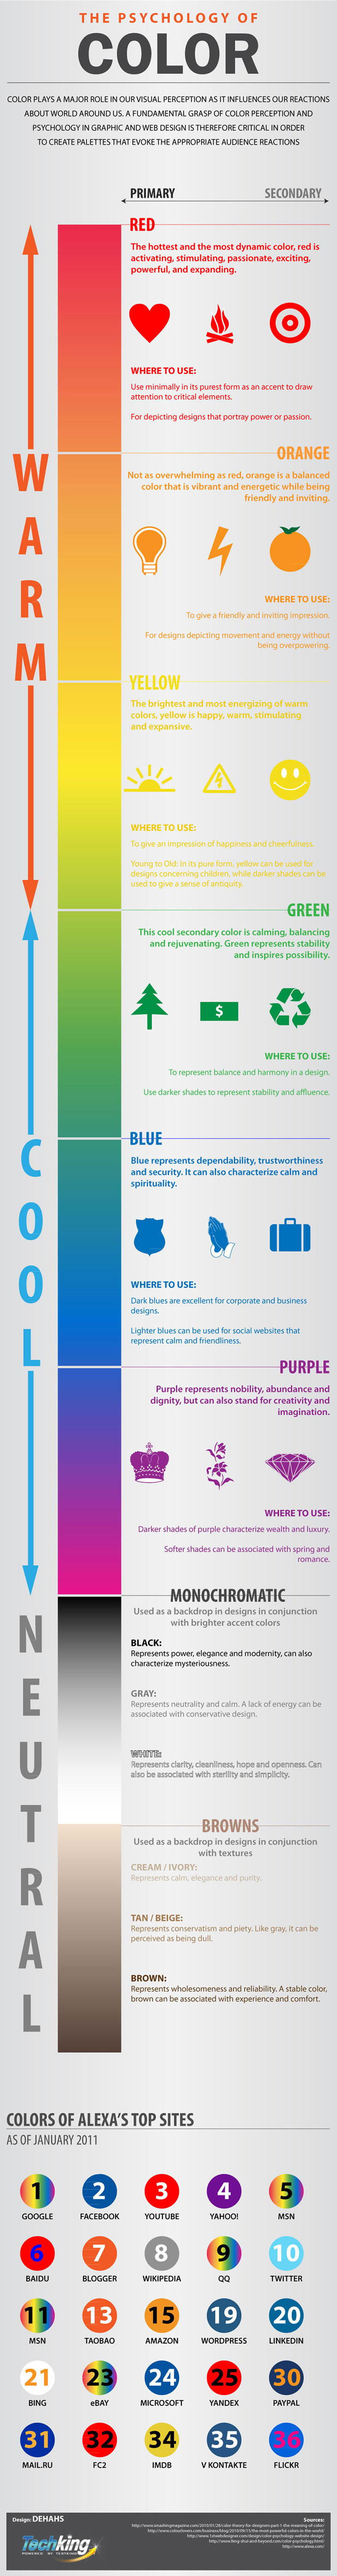 psychologie-couleurs-logos